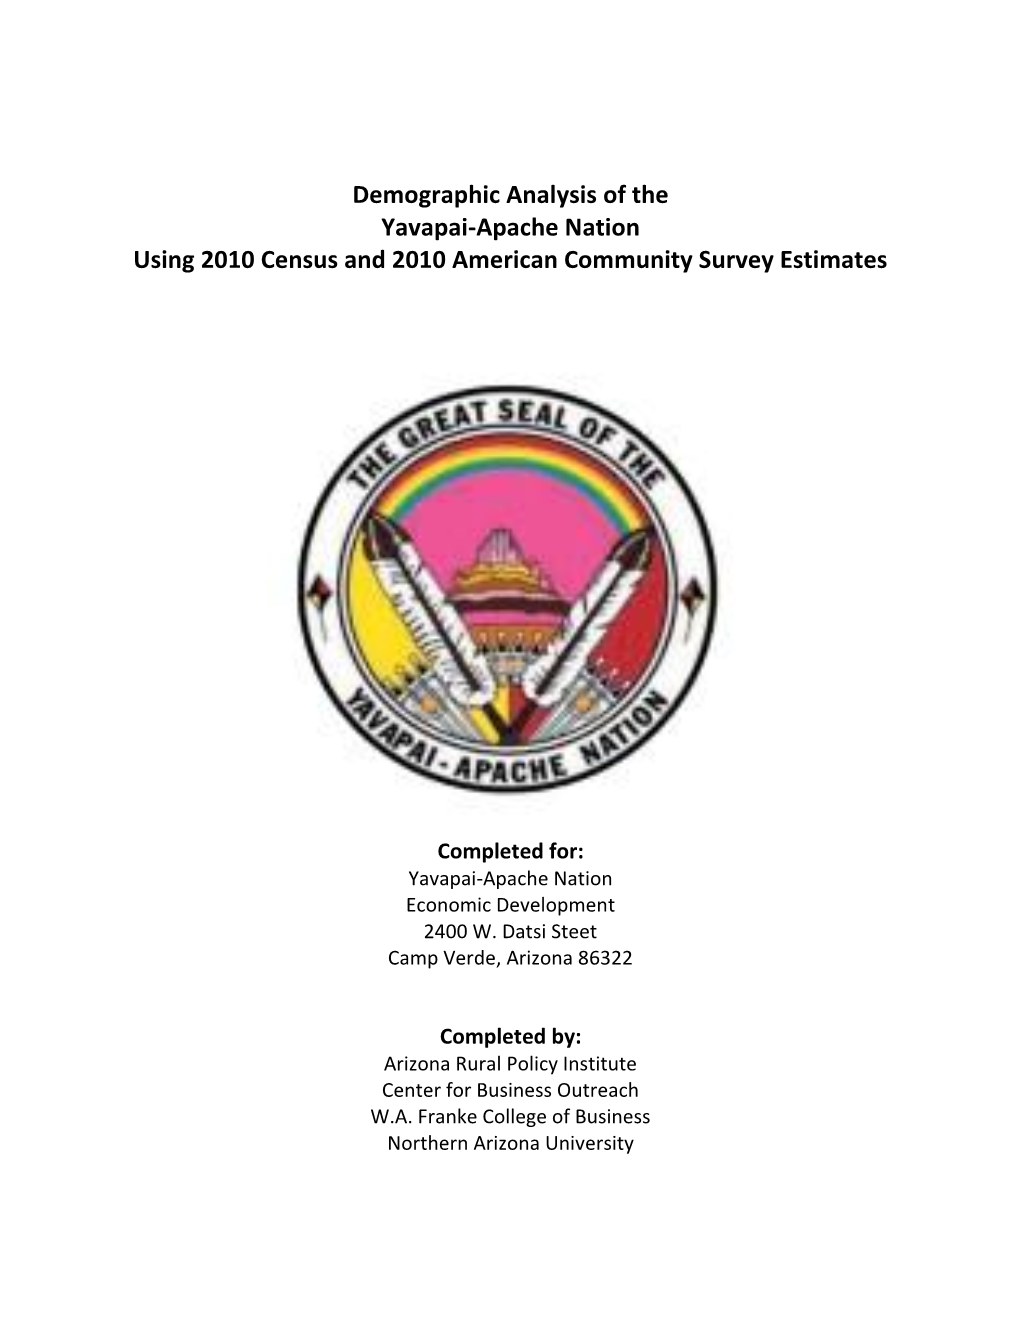 Yavapai-Apache Nation Using 2010 Census and 2010 American Community Survey Estimates